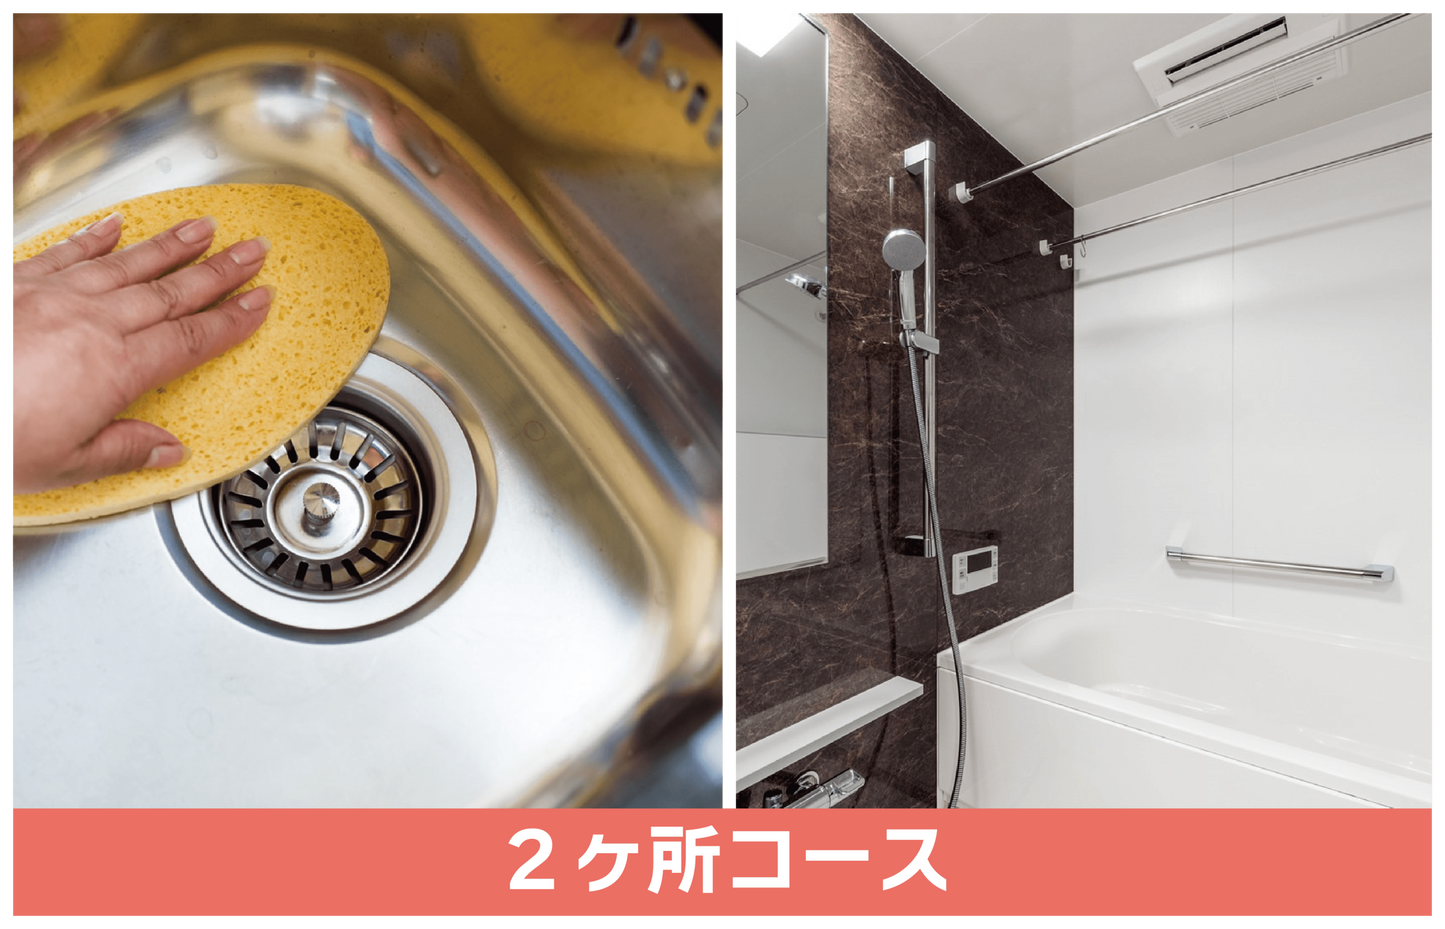 GZOK SHIELD 2カ所コース（浴室+キッチン）6カ月後コーディング 16800円（税抜）【f008】